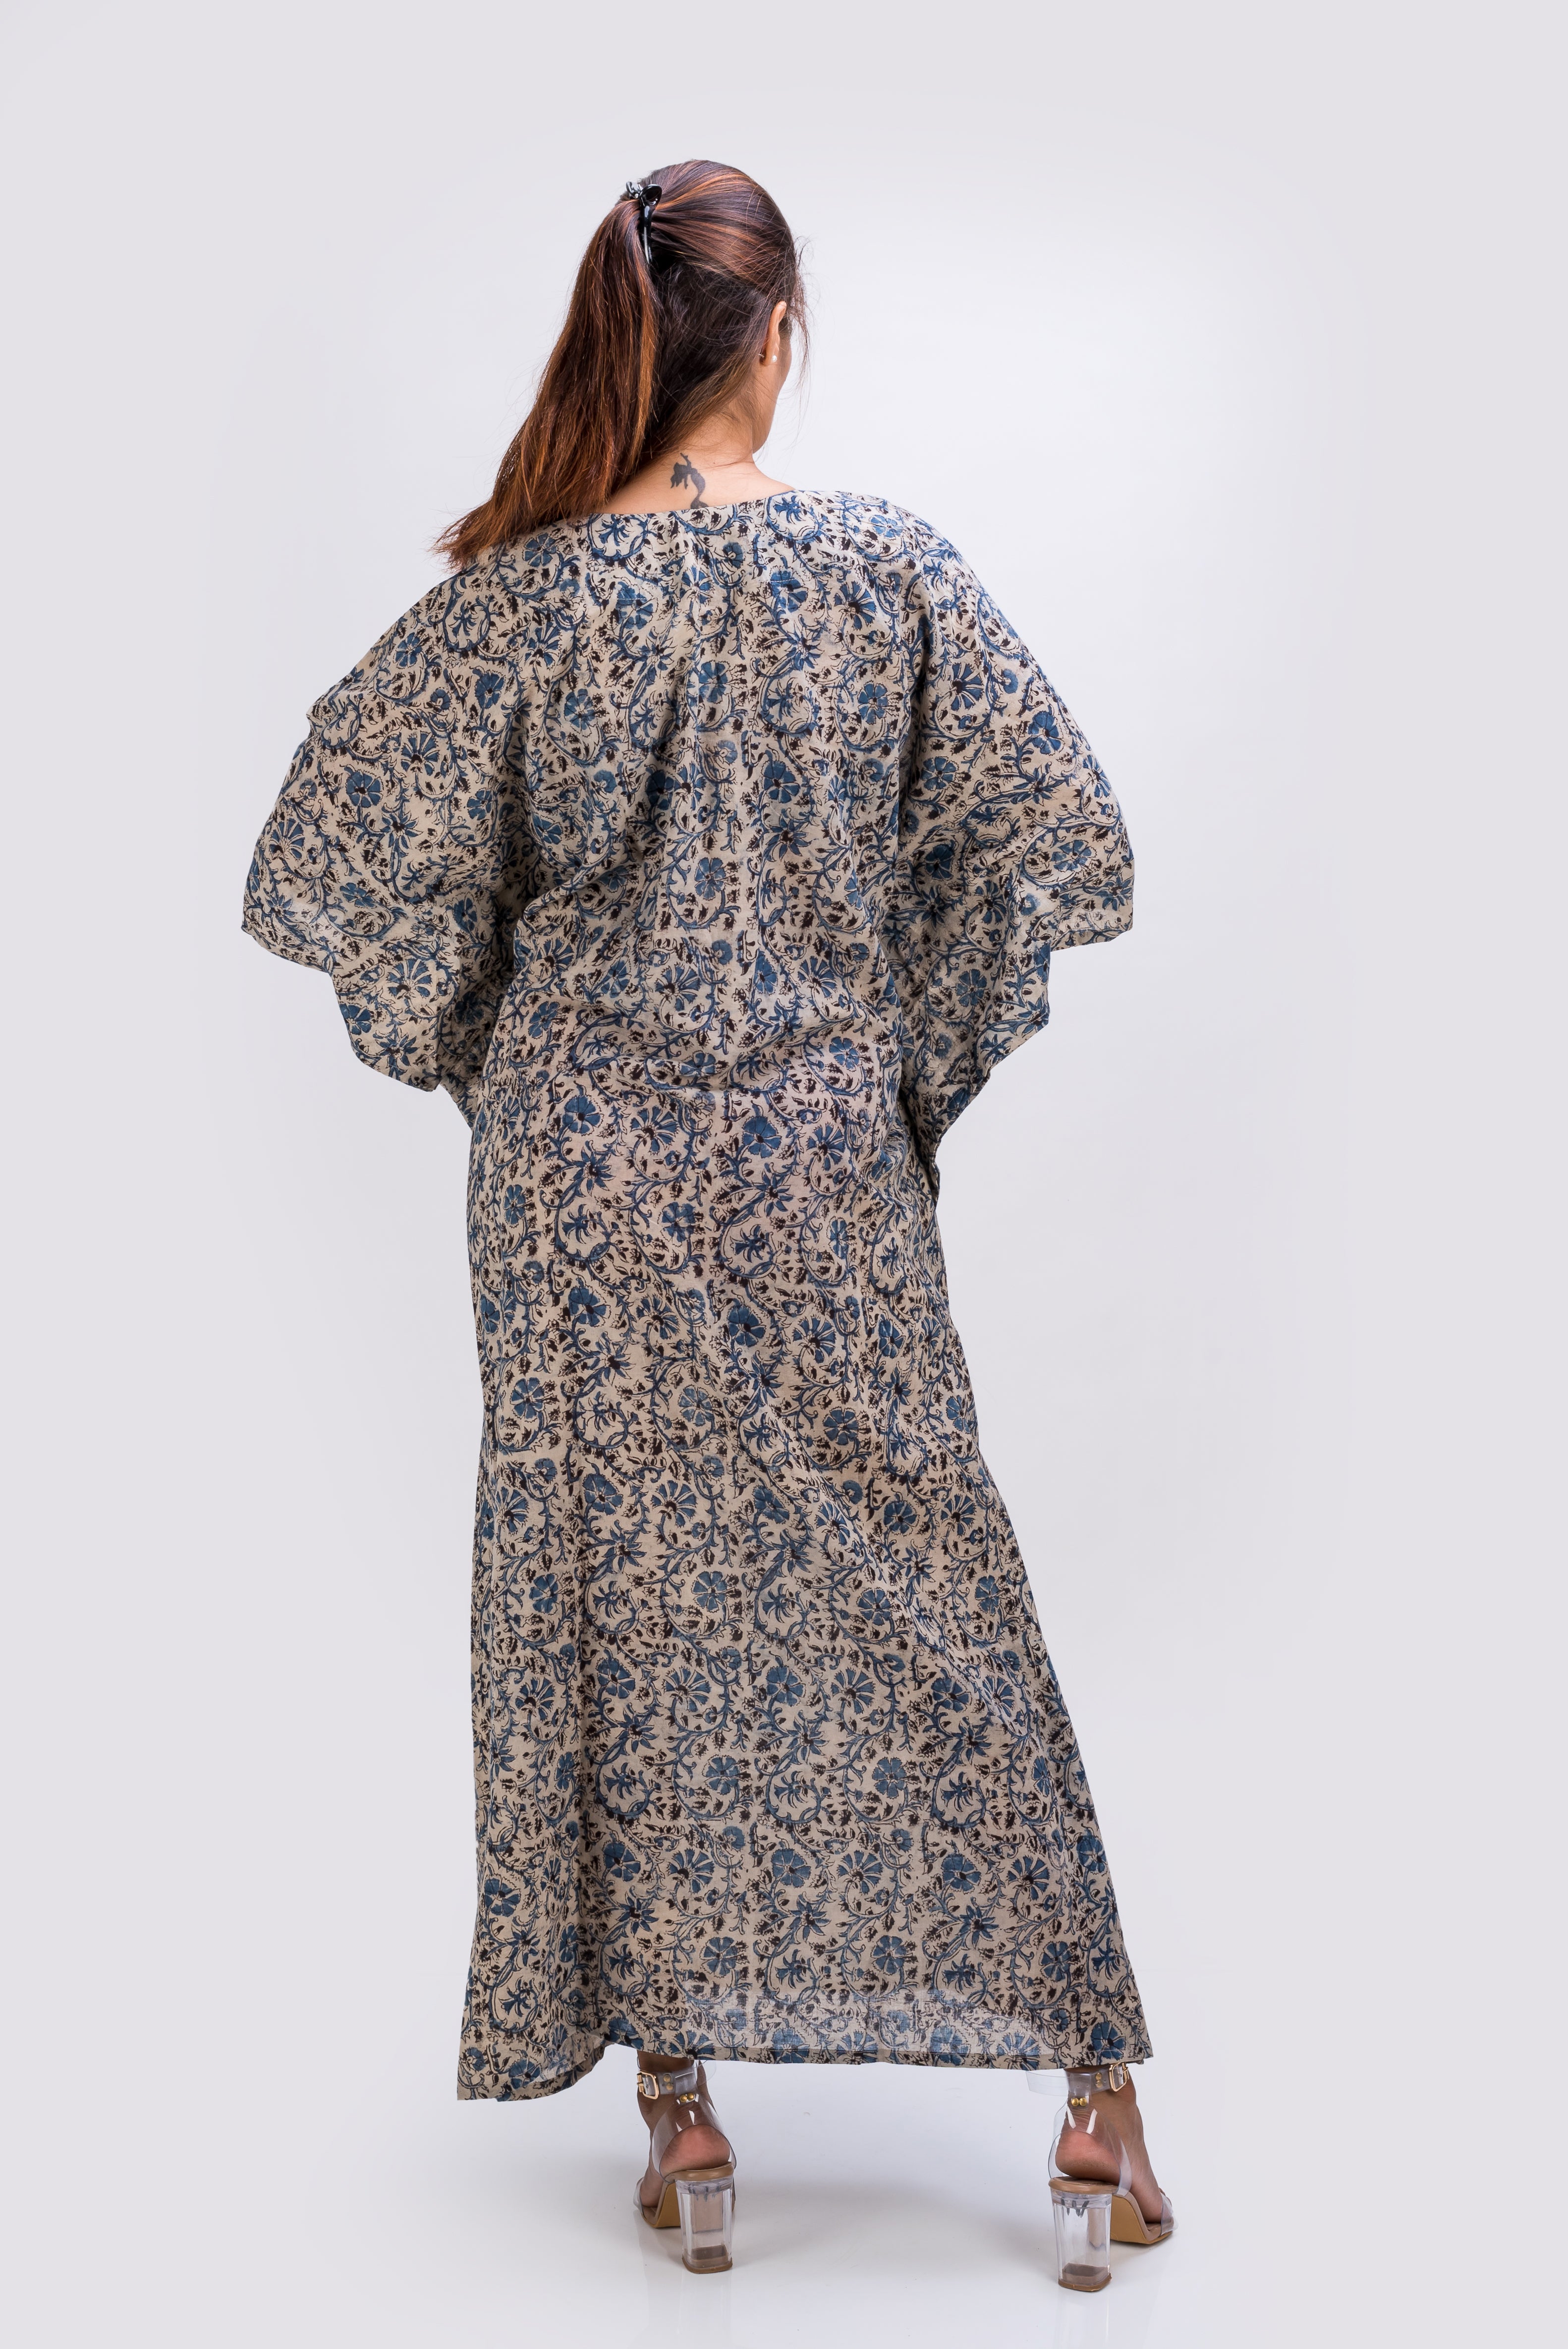 529-112  Whitelotus "Toni" kaftan maxi Women's Dress